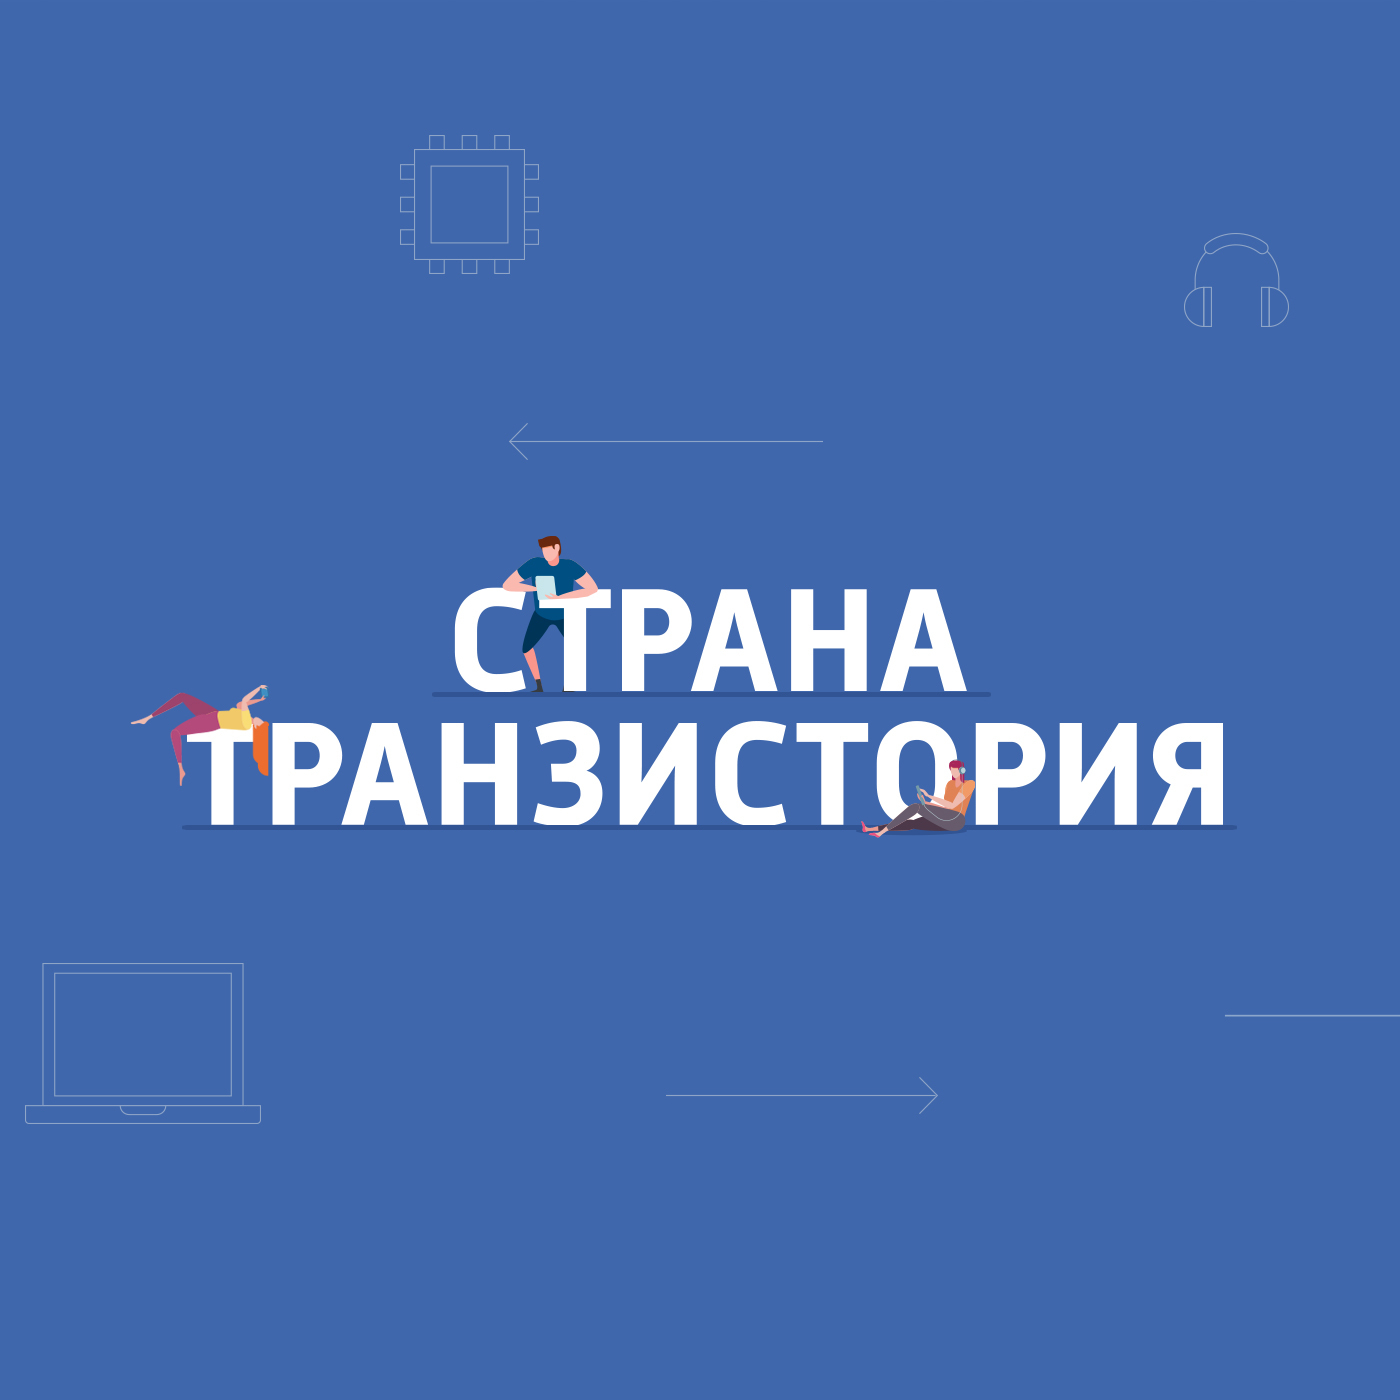 Картаев Павел Mail.ru объявил о начале предзаказа на умную колонку Капсула